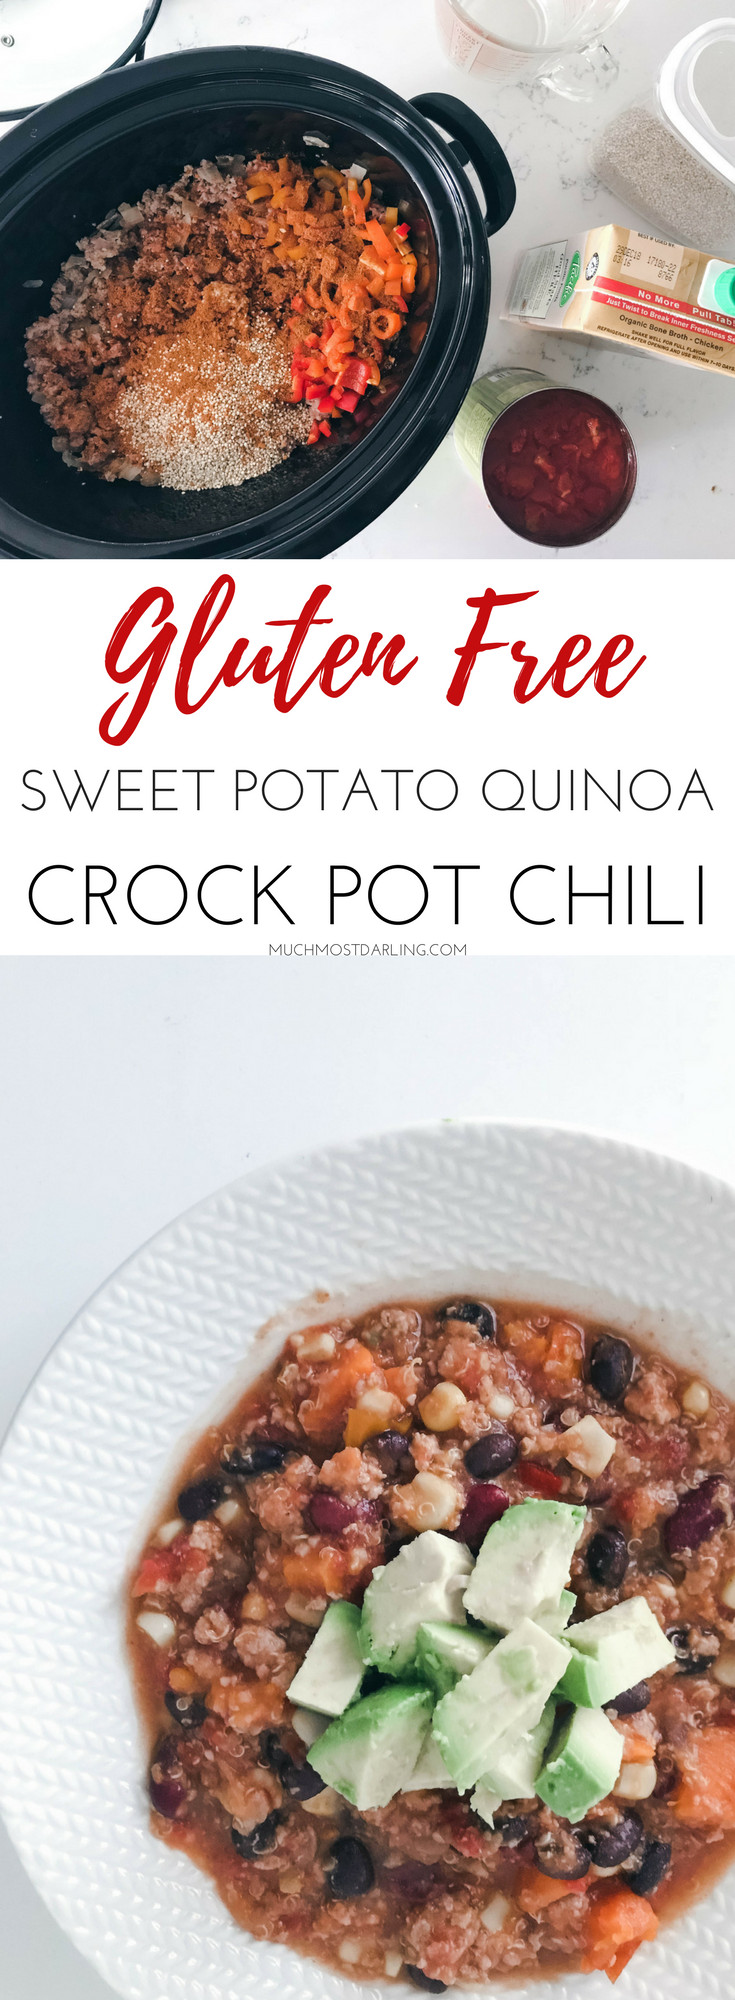 Dairy Free Crock Pot Recipes
 Gluten Free Crockpot Recipe Sweet Potato & Ground Turkey